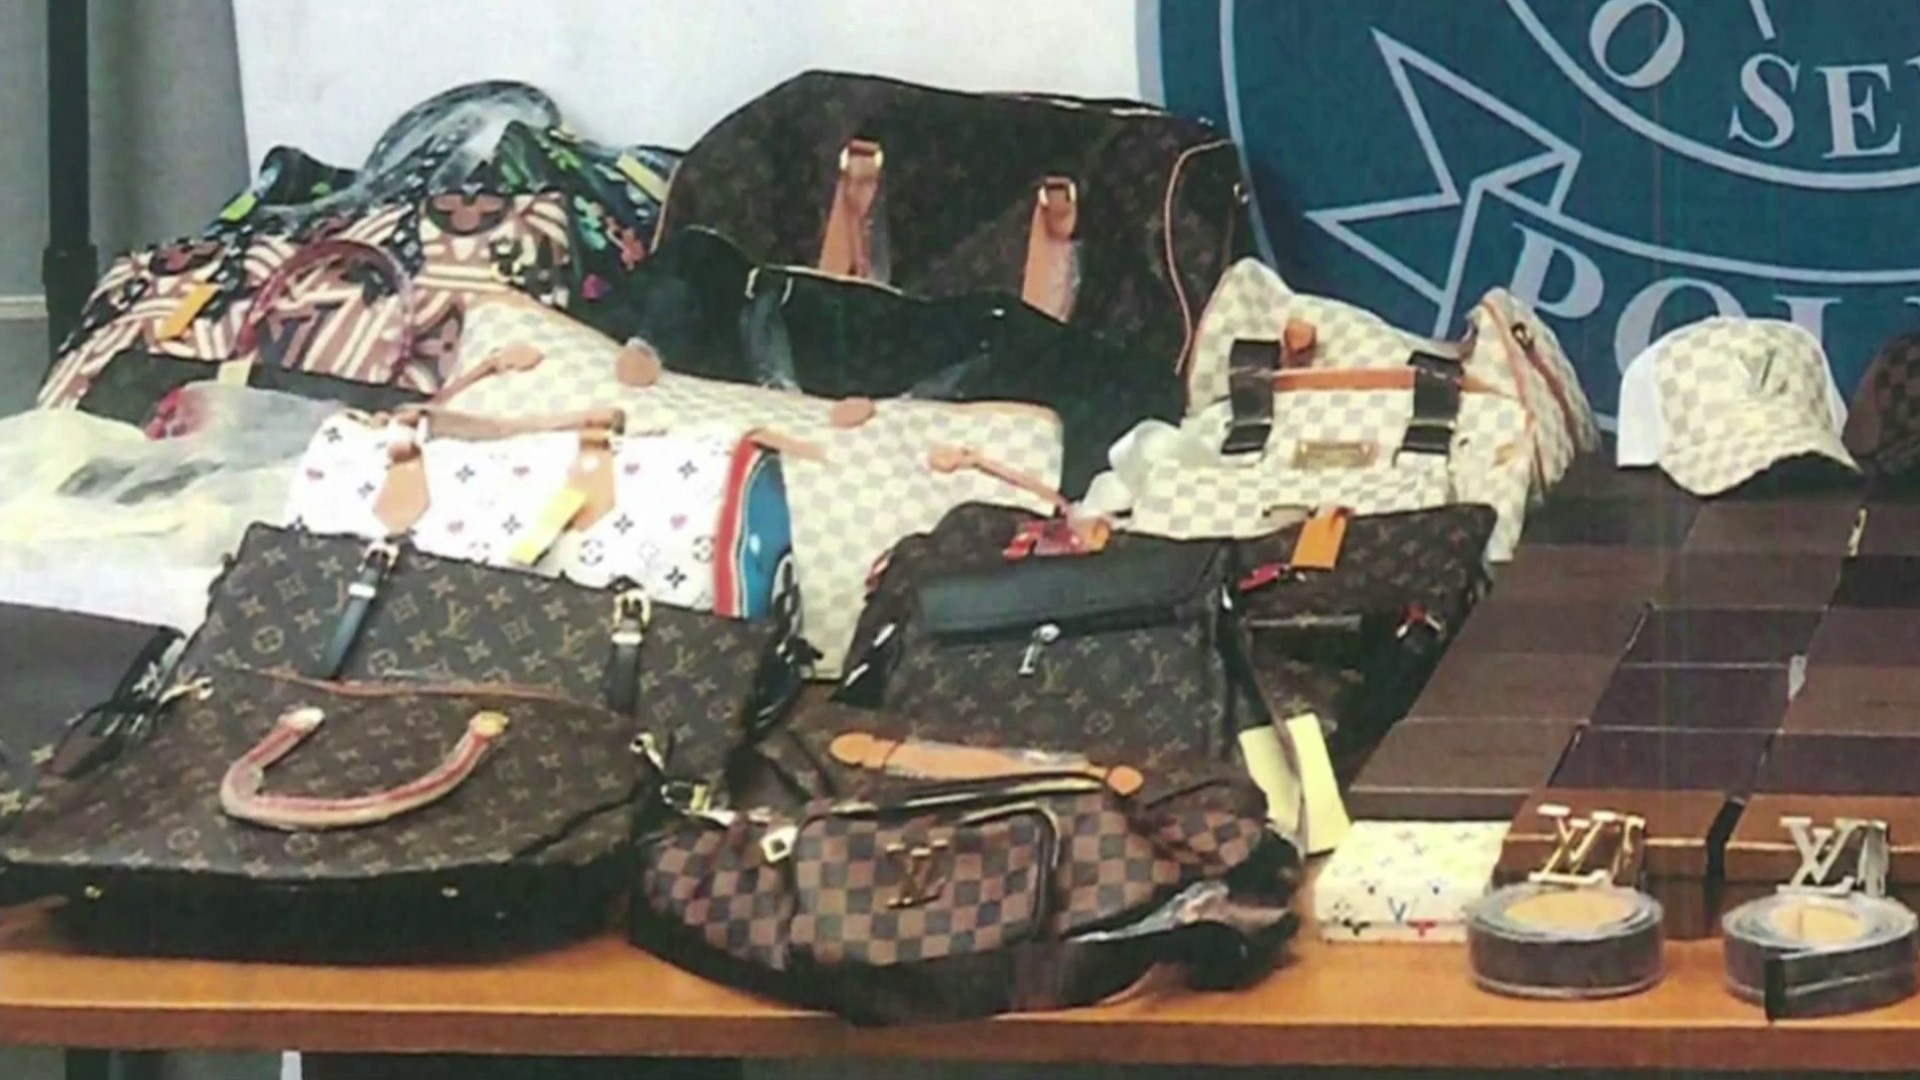 Counterfeit designer bags, masks seized, Guam News